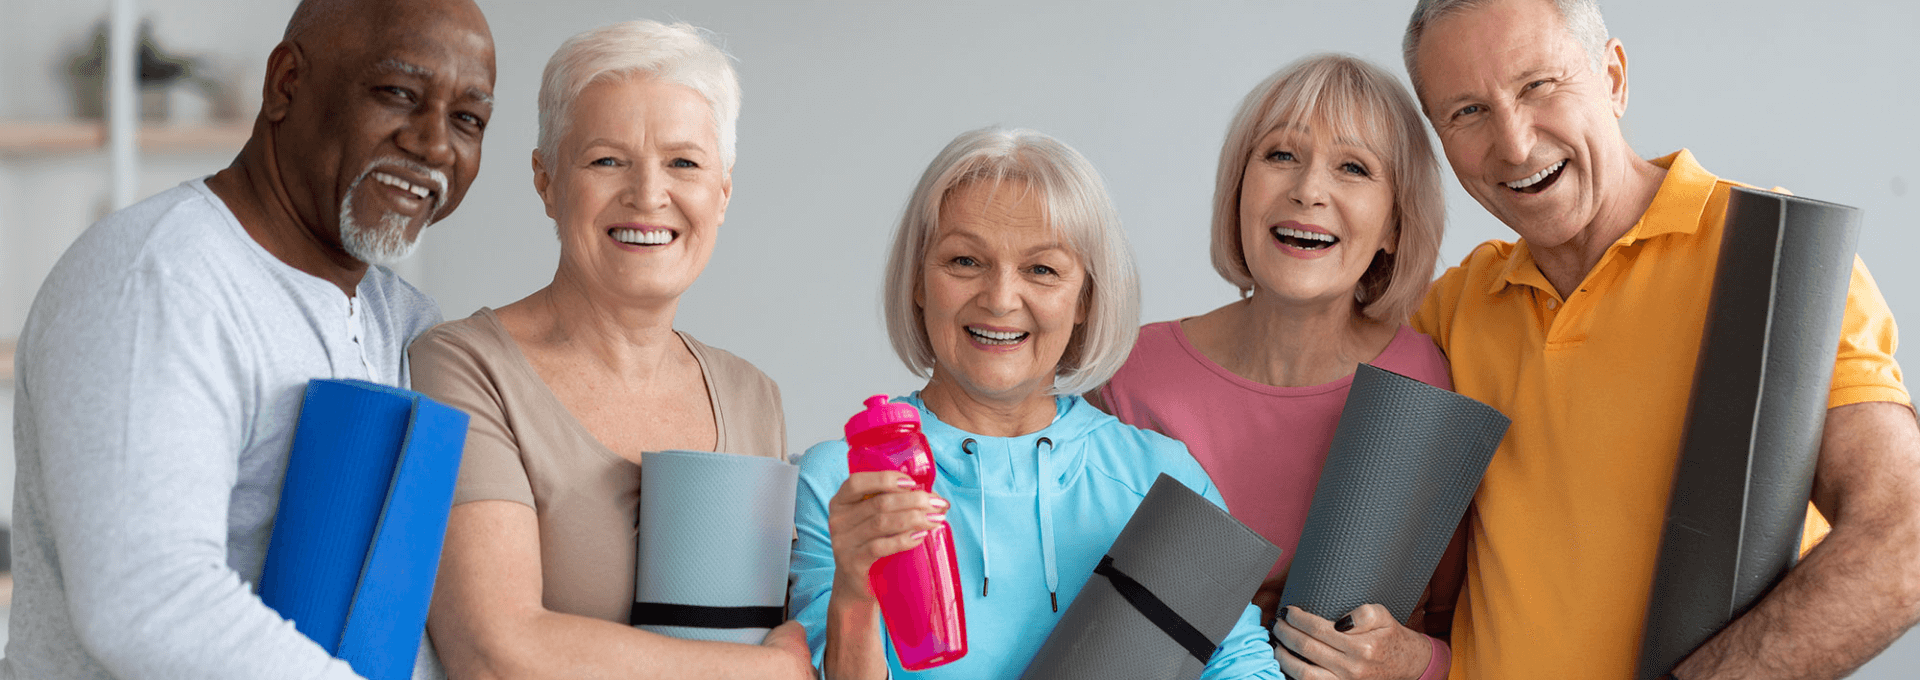 seniors engaging in healthy aging activities